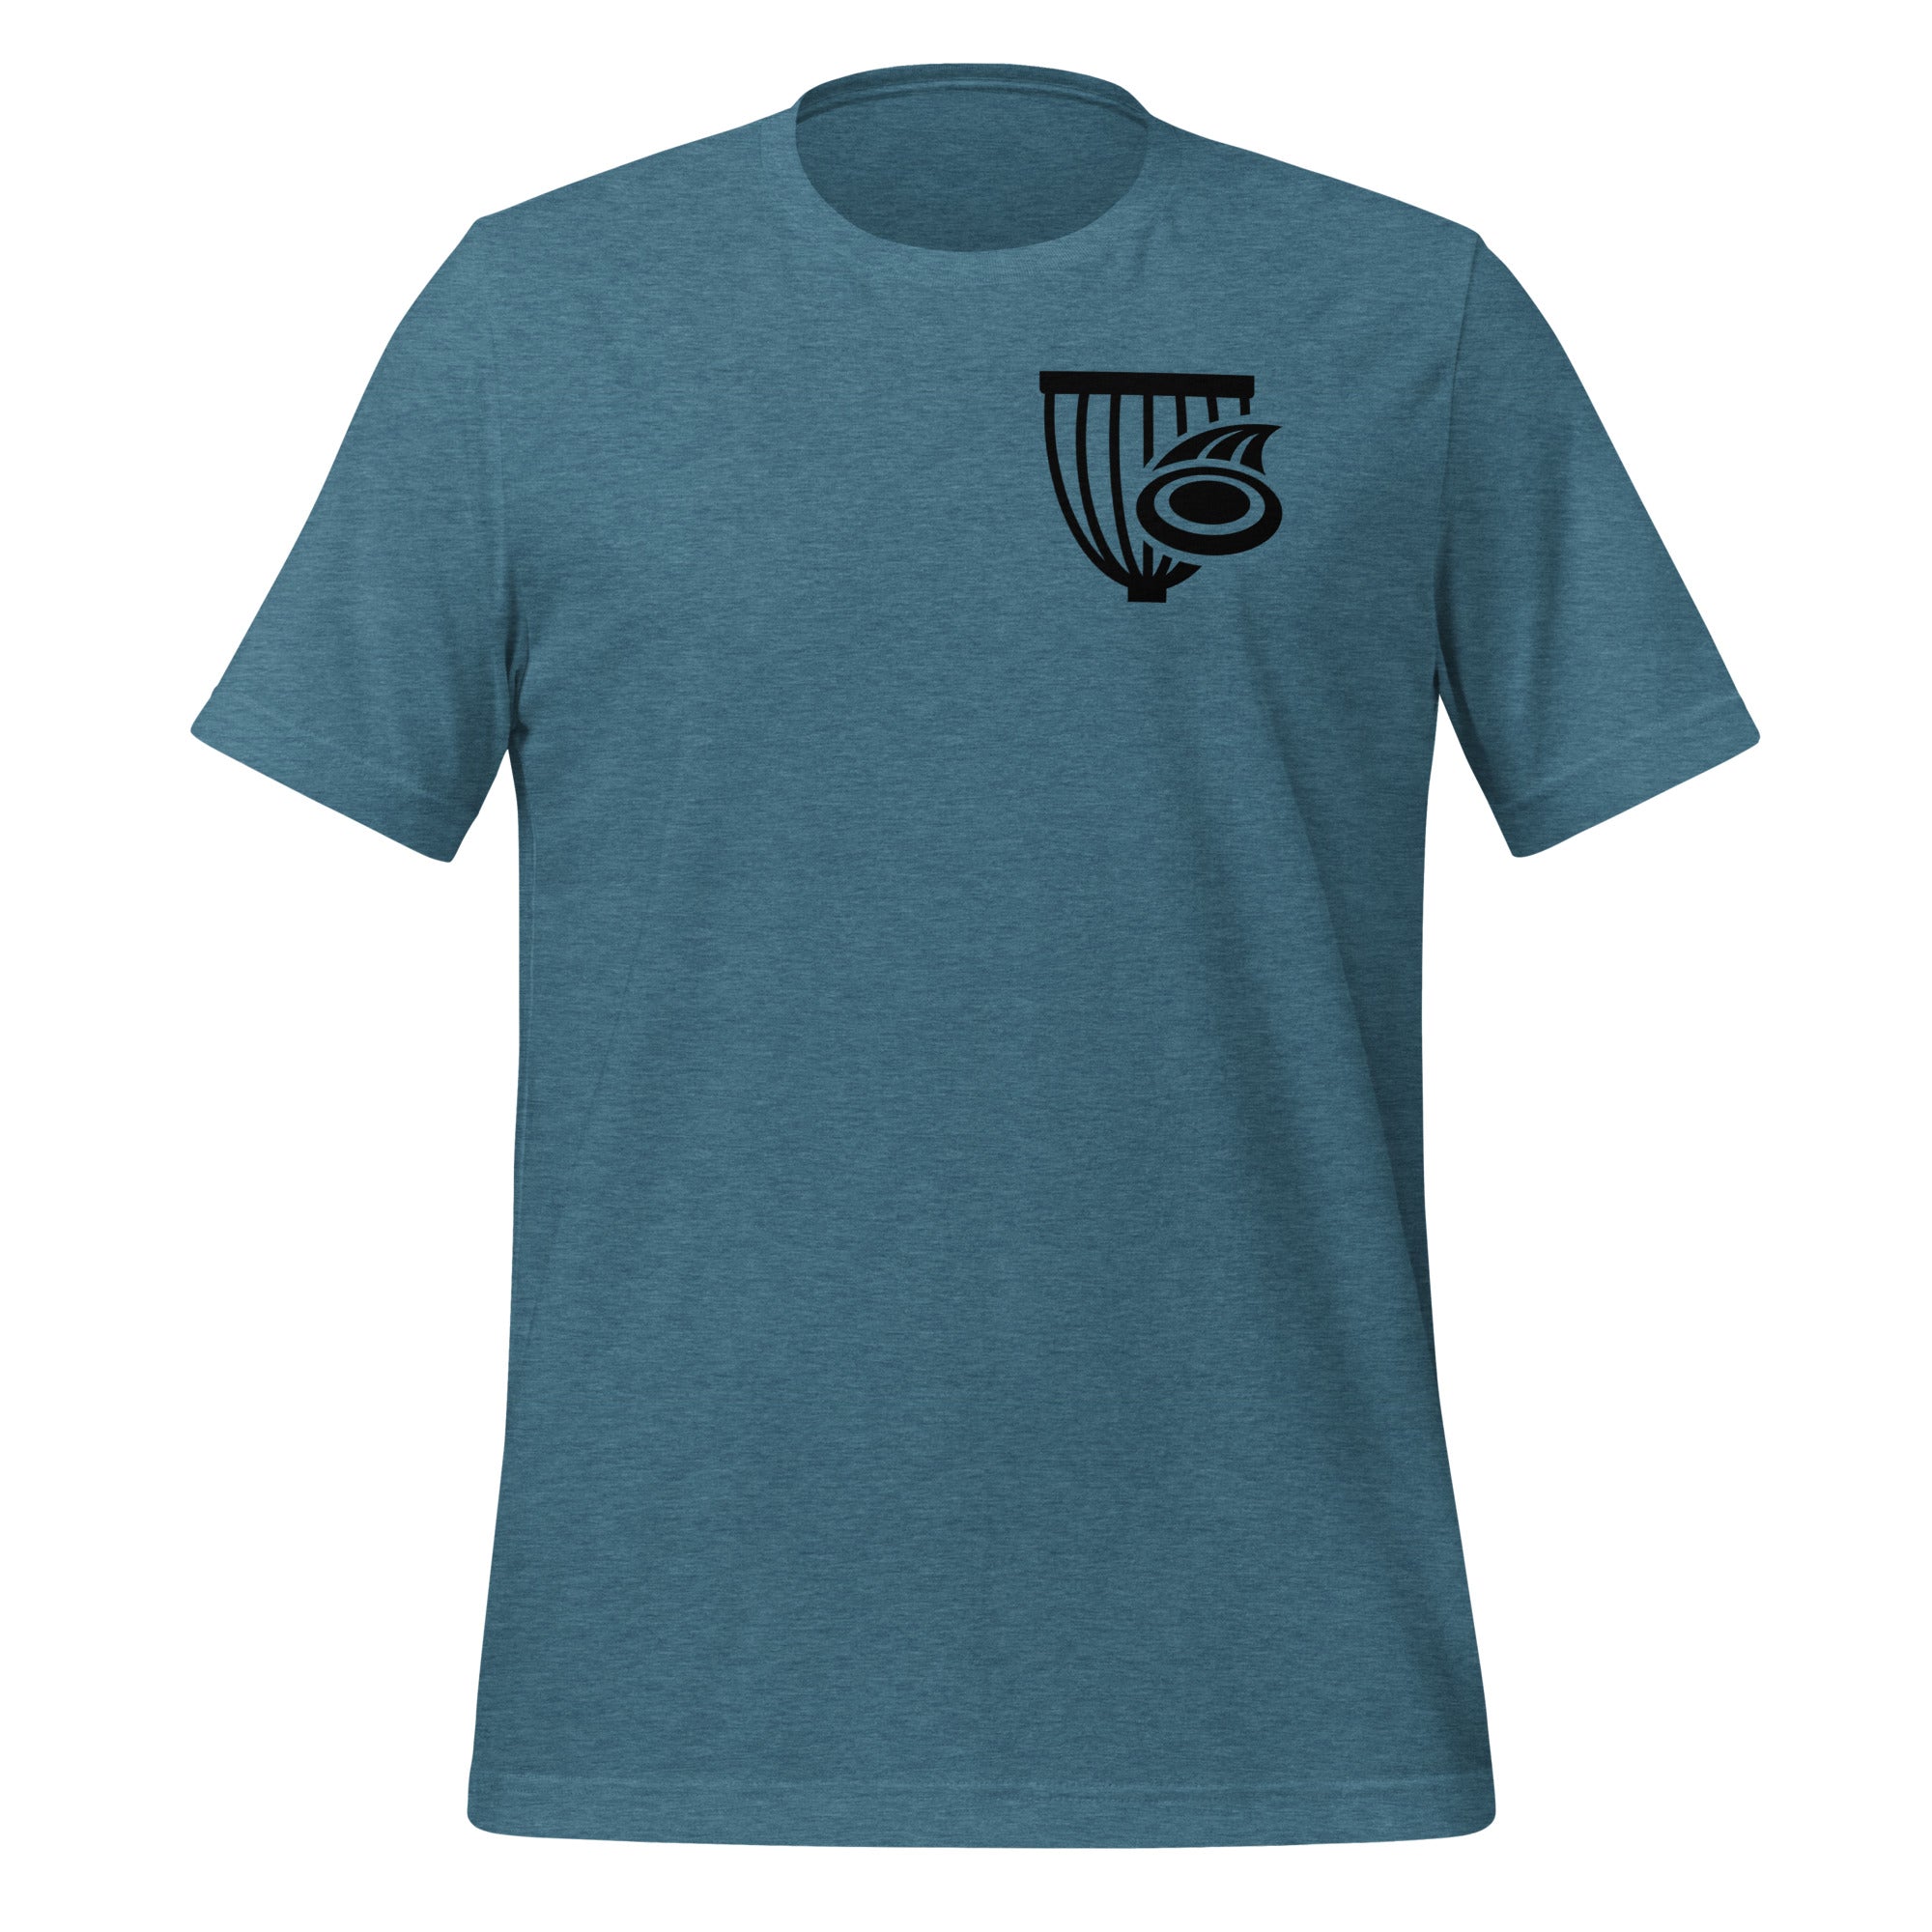 Buy heather-deep-teal The Disc Depot Short Sleeve Unisex t-shirt